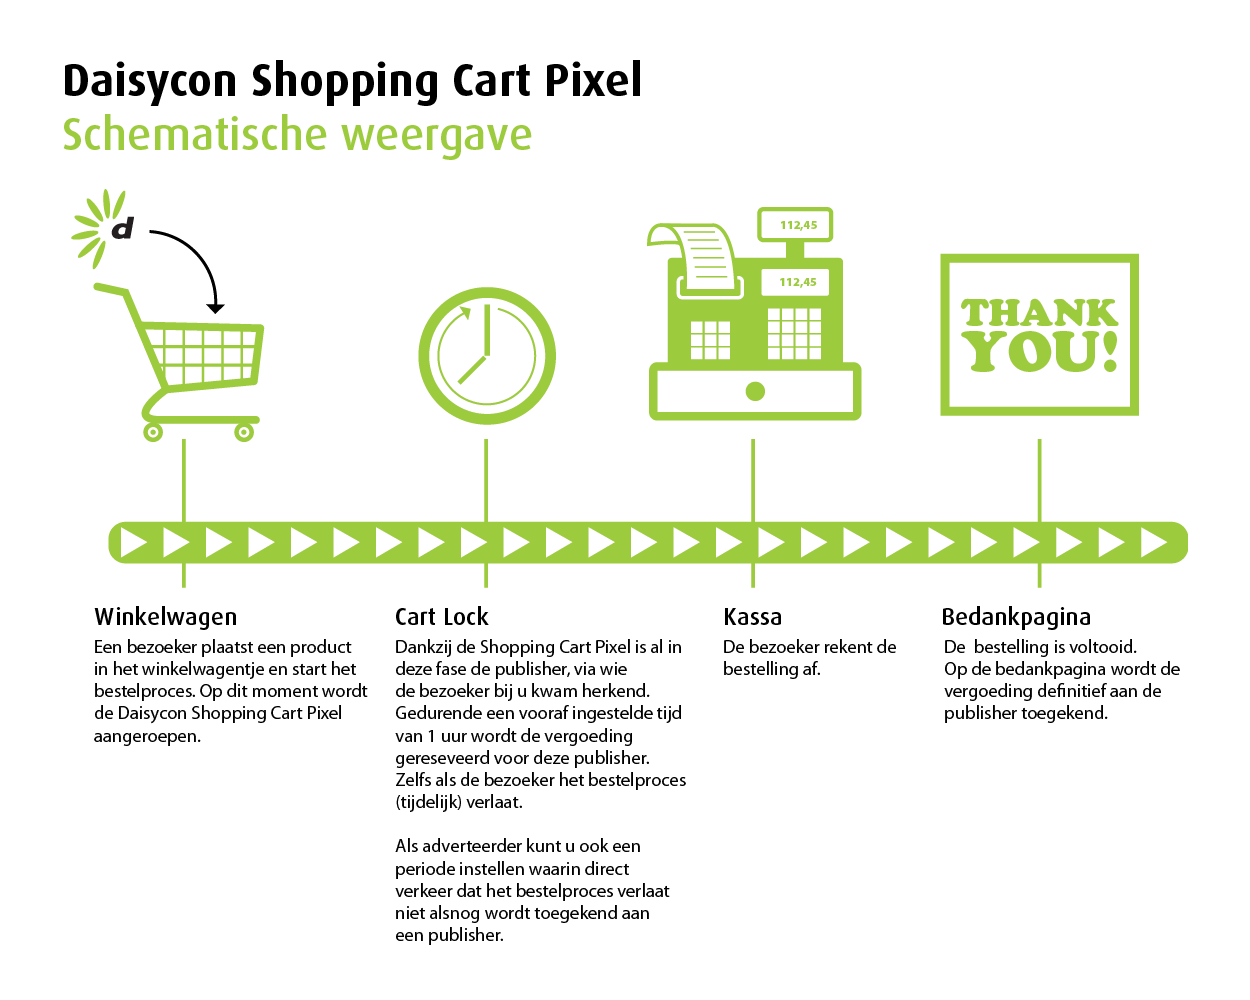 Shopping cart pixel